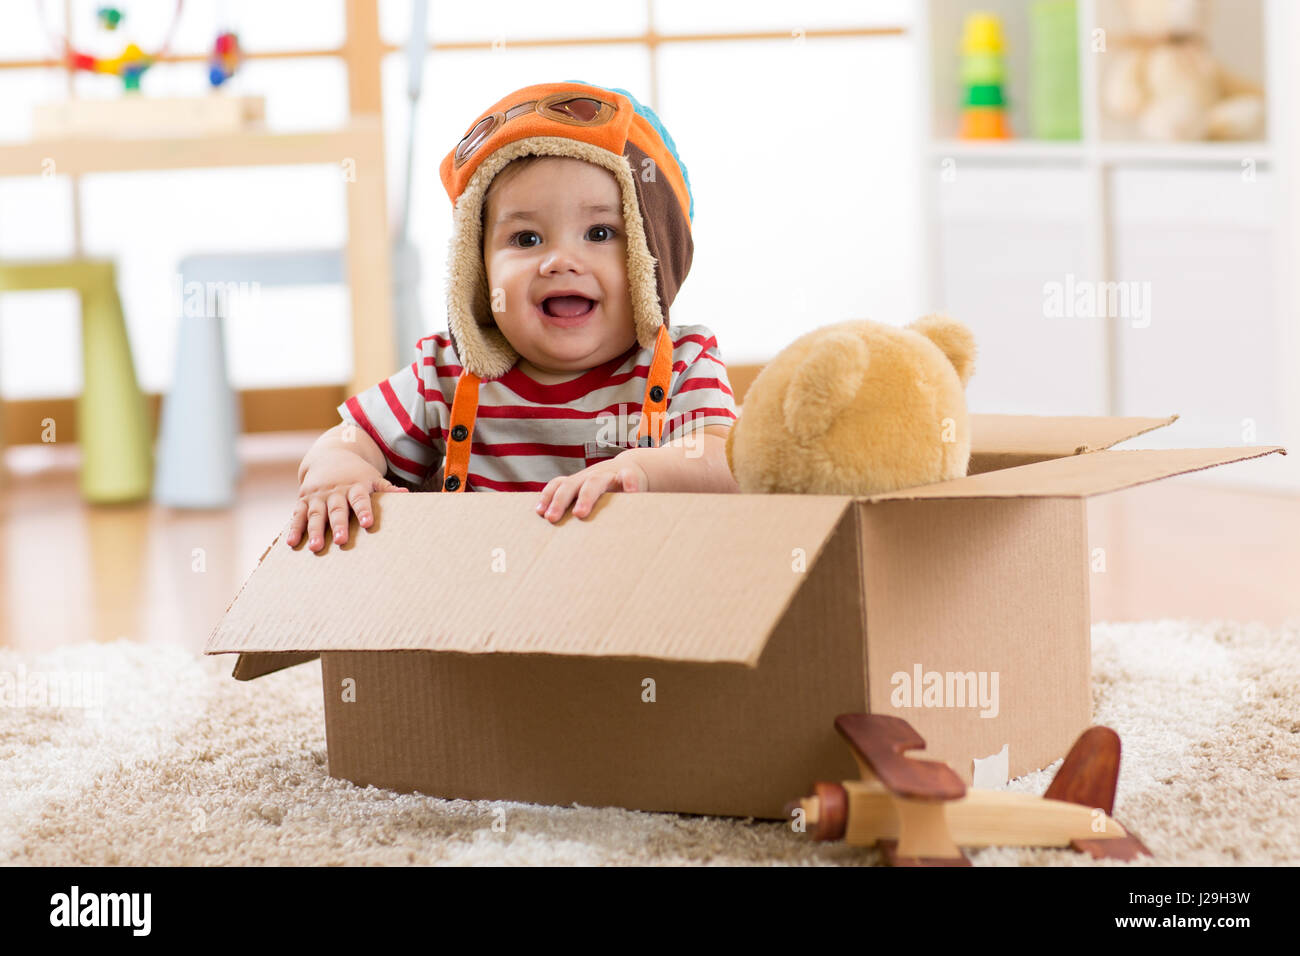 Smiling pilot aviator baby boy with teddy bear toy plays in cardboard box Stock Photo